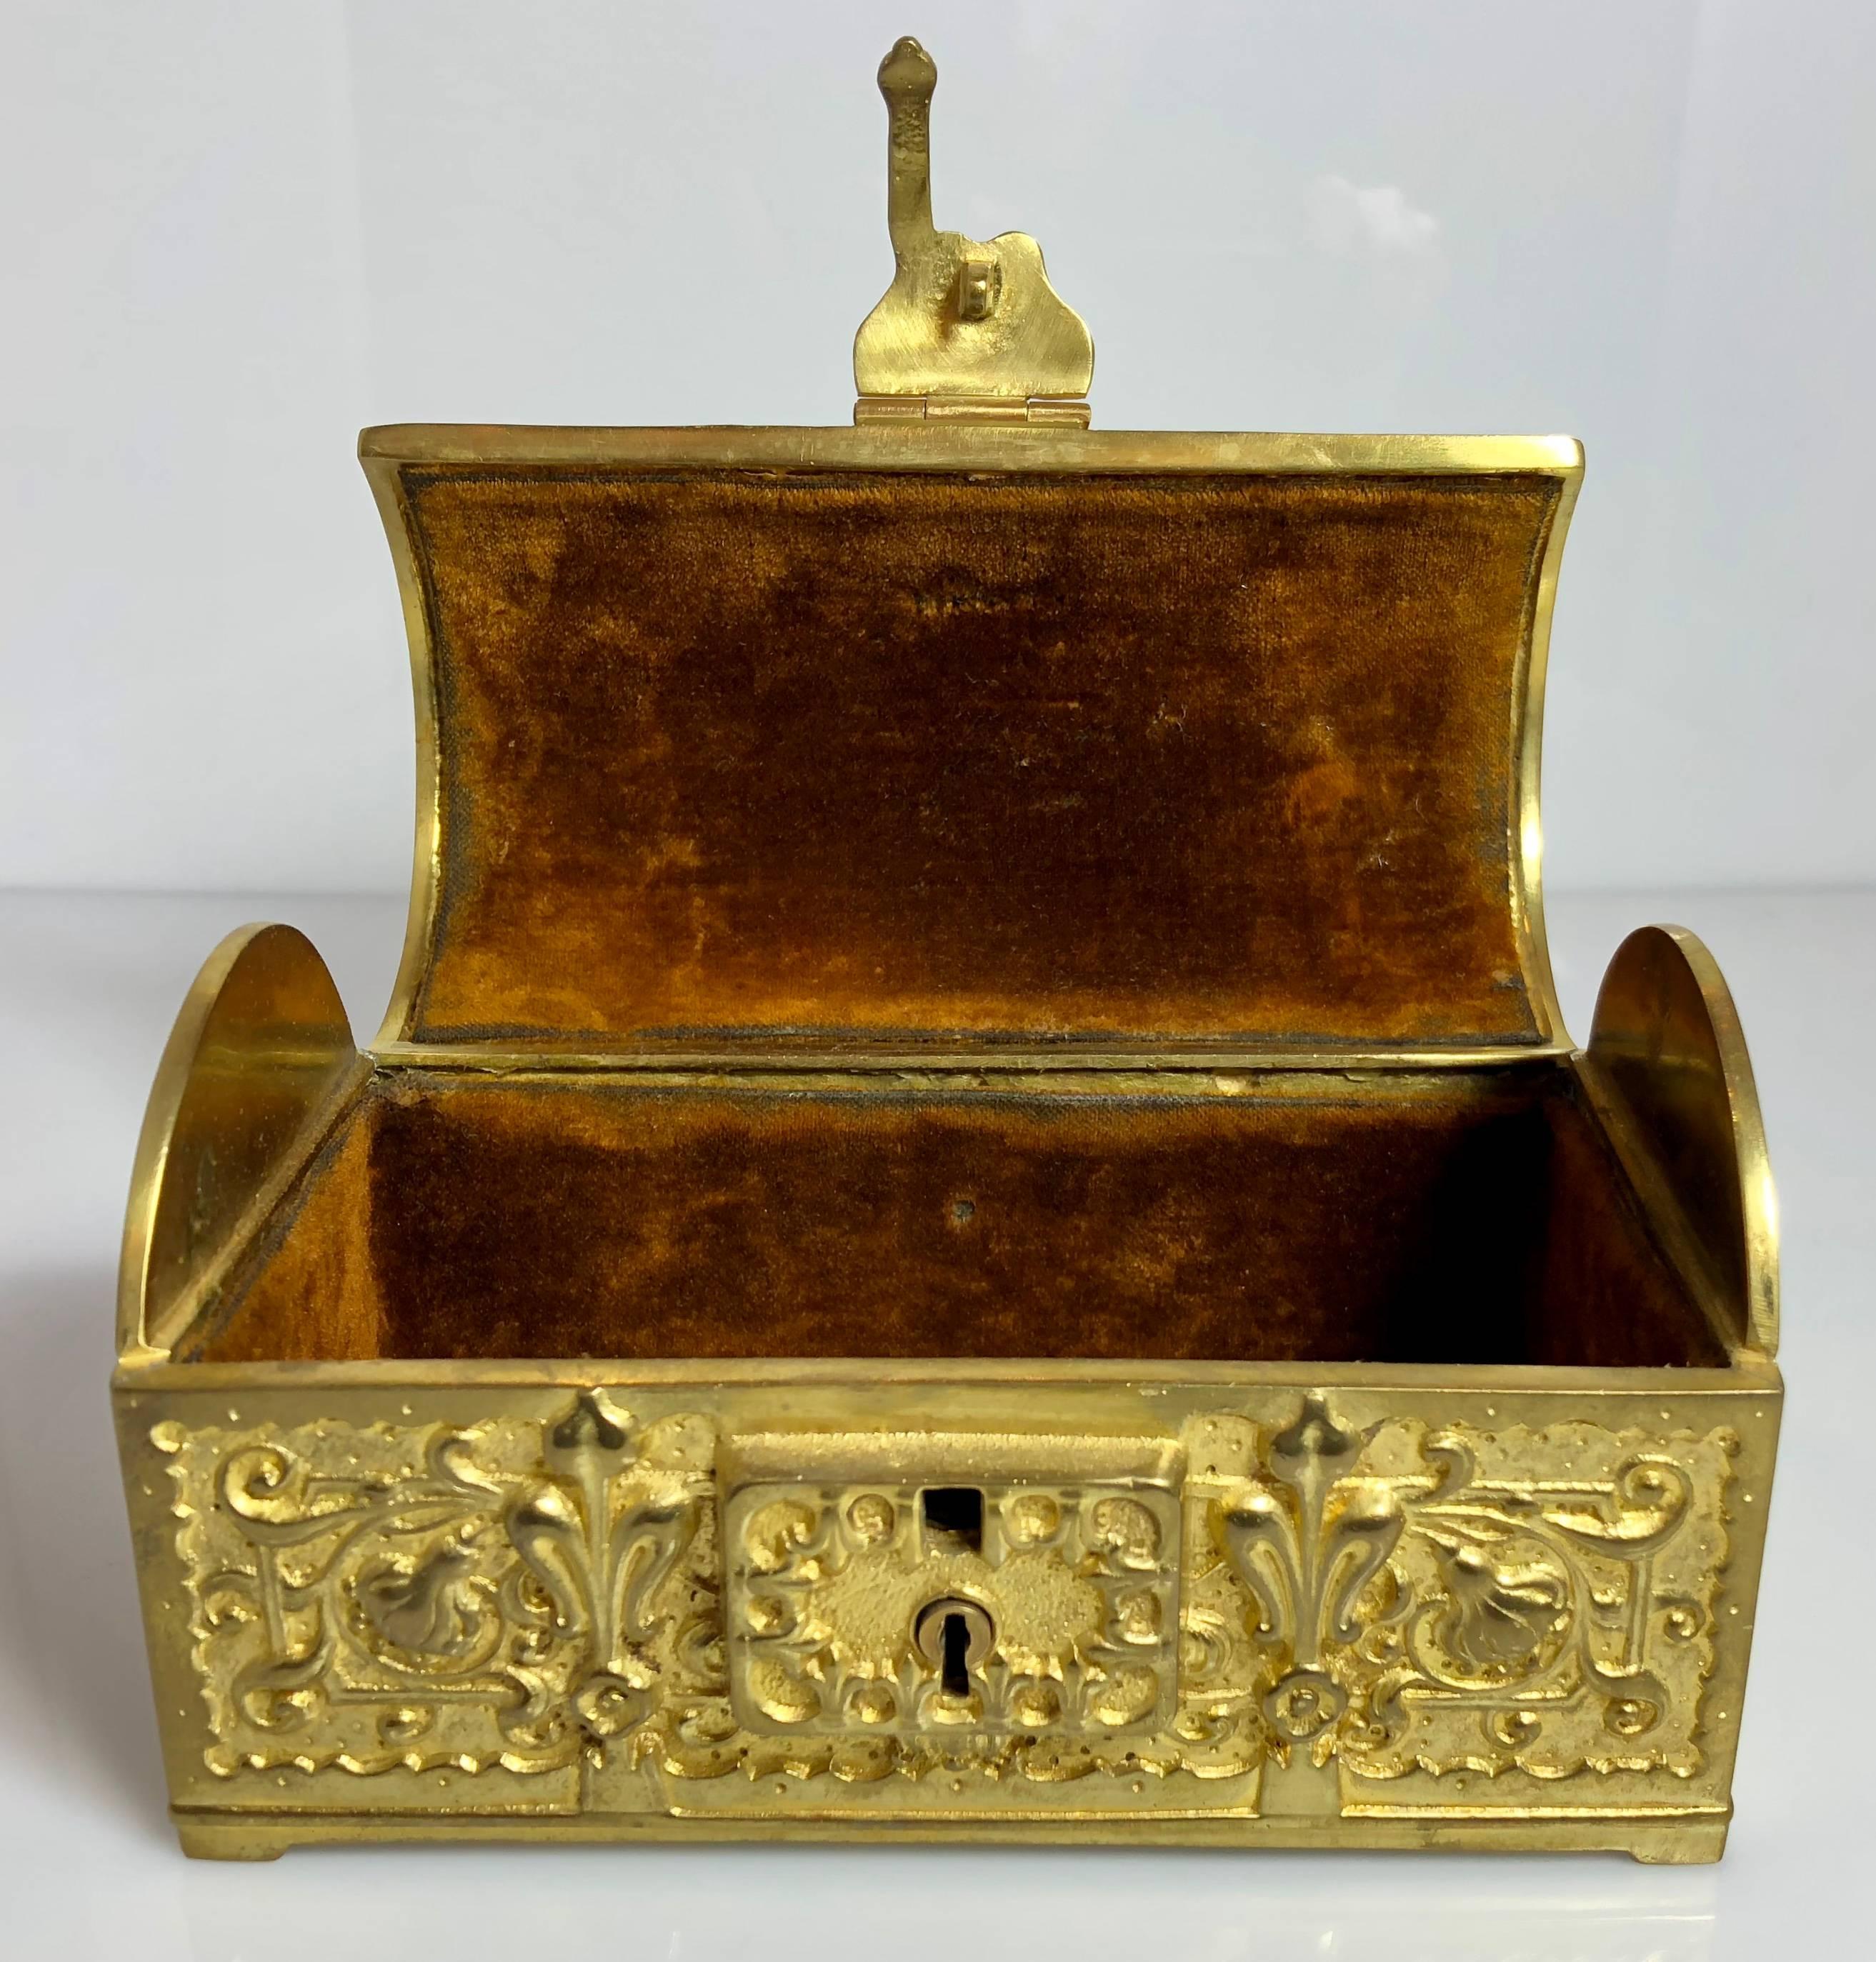 Antique German bronze jewel box, circa 1890-1900.